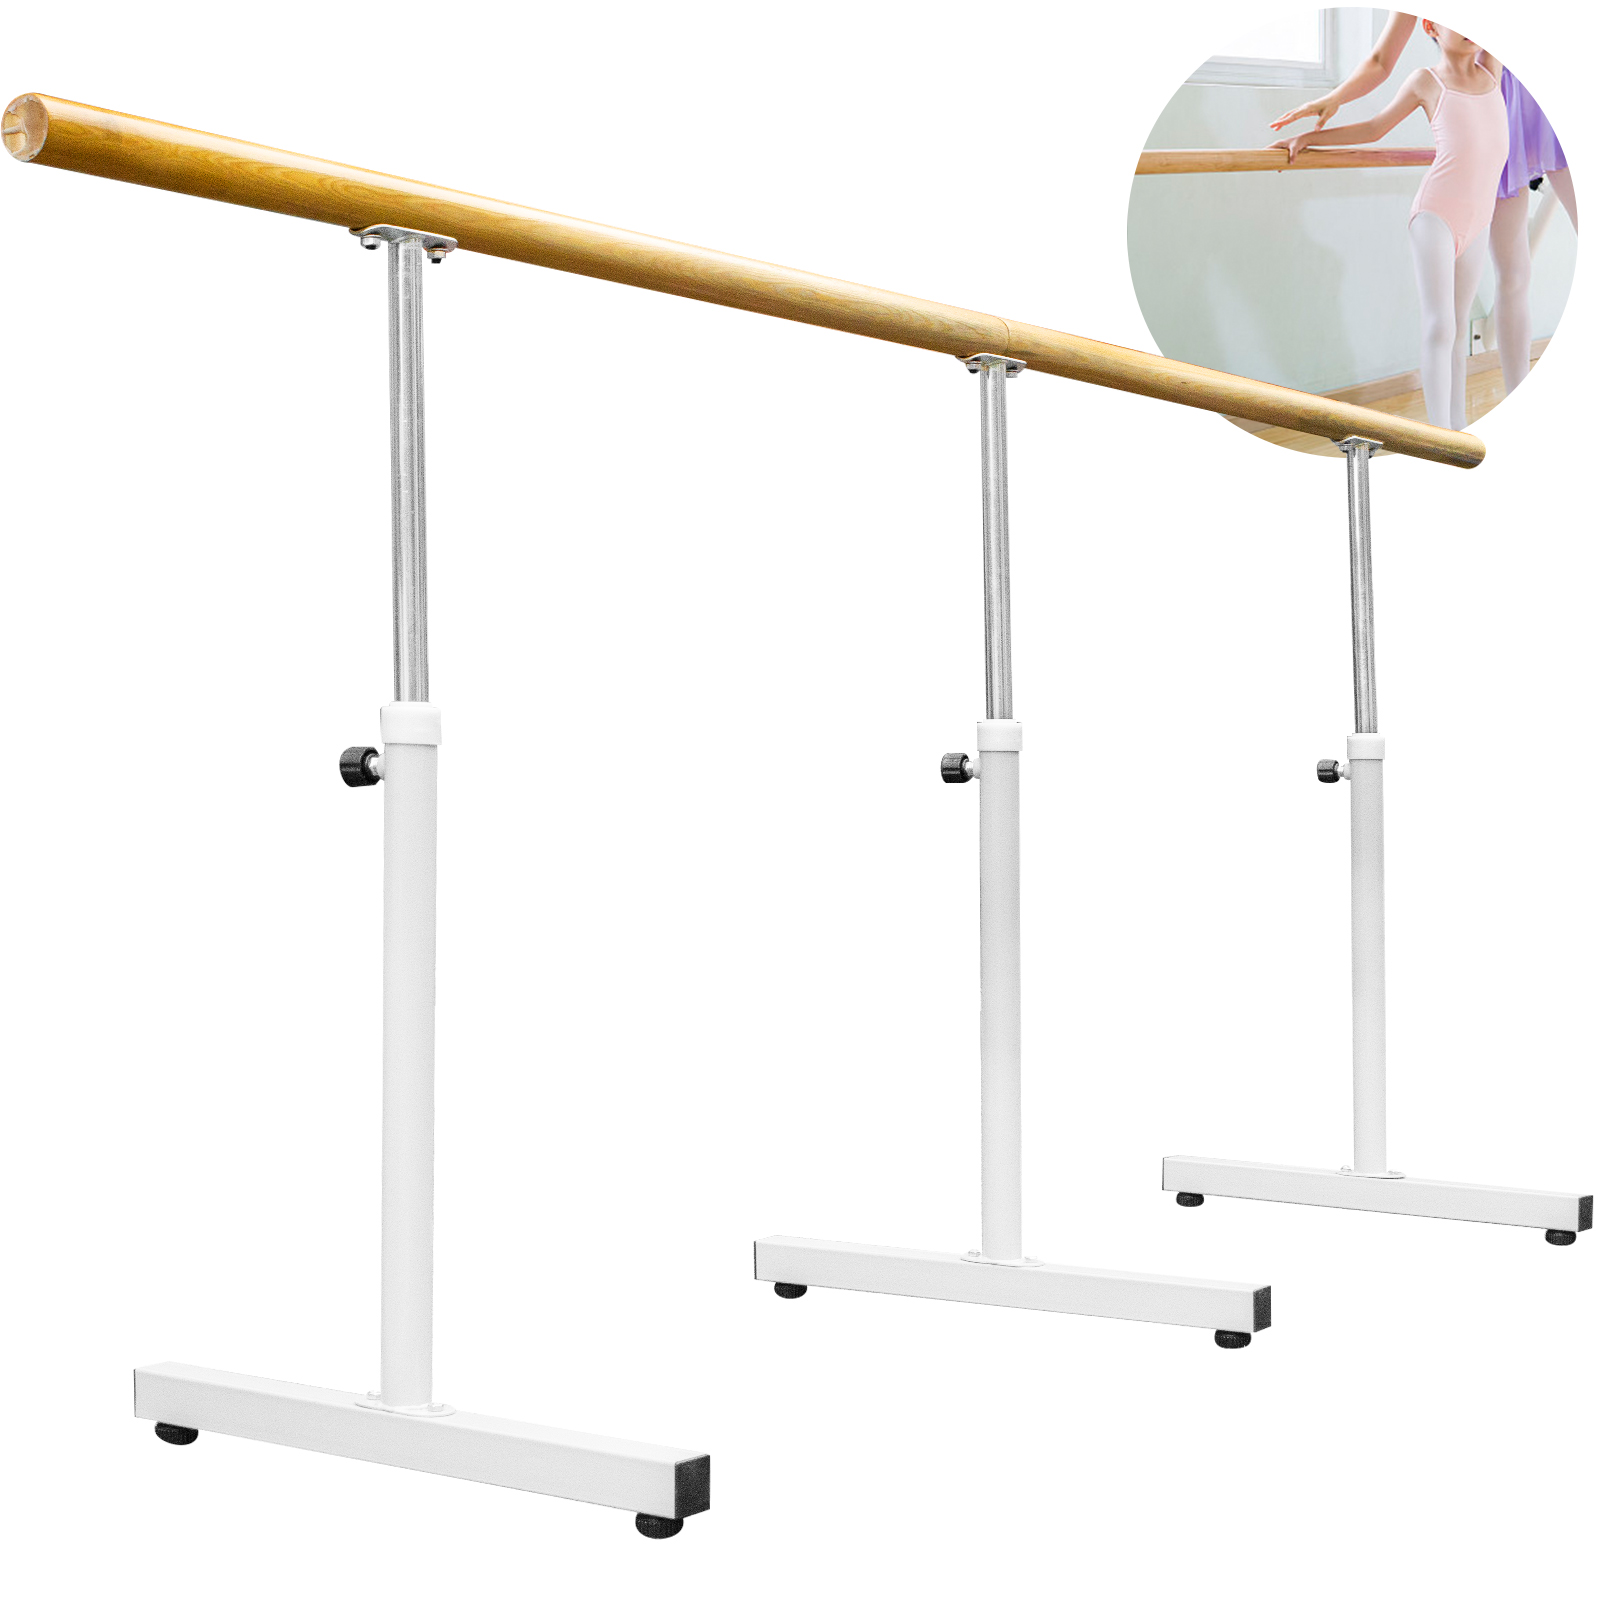  Portable Freestanding Ballet Barre System, Stretch